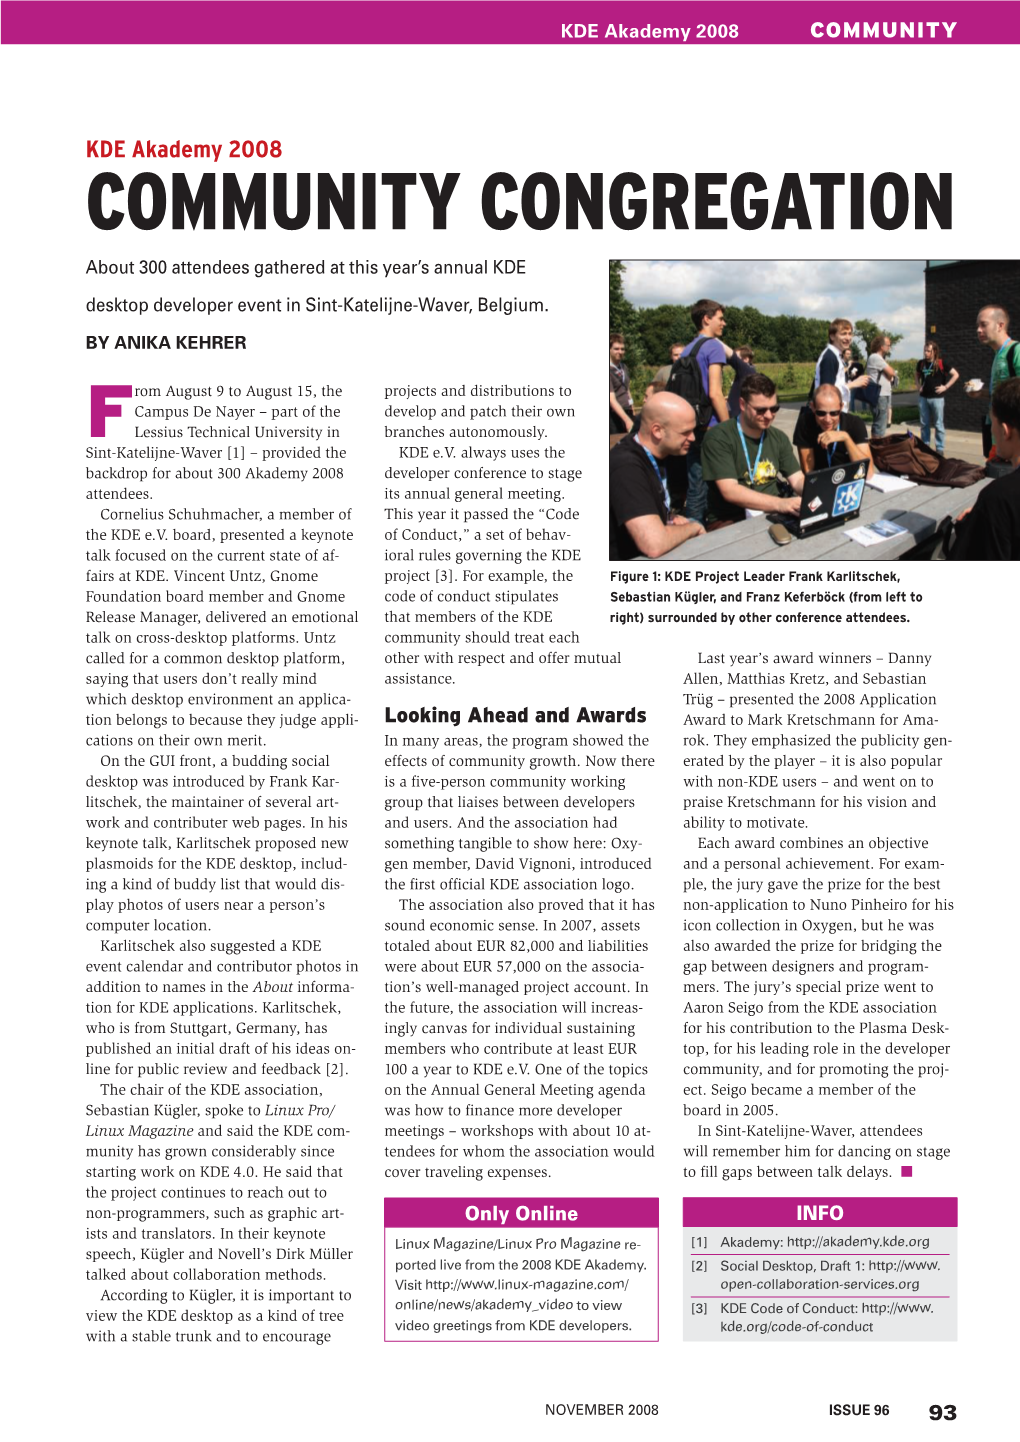 Community Congregation